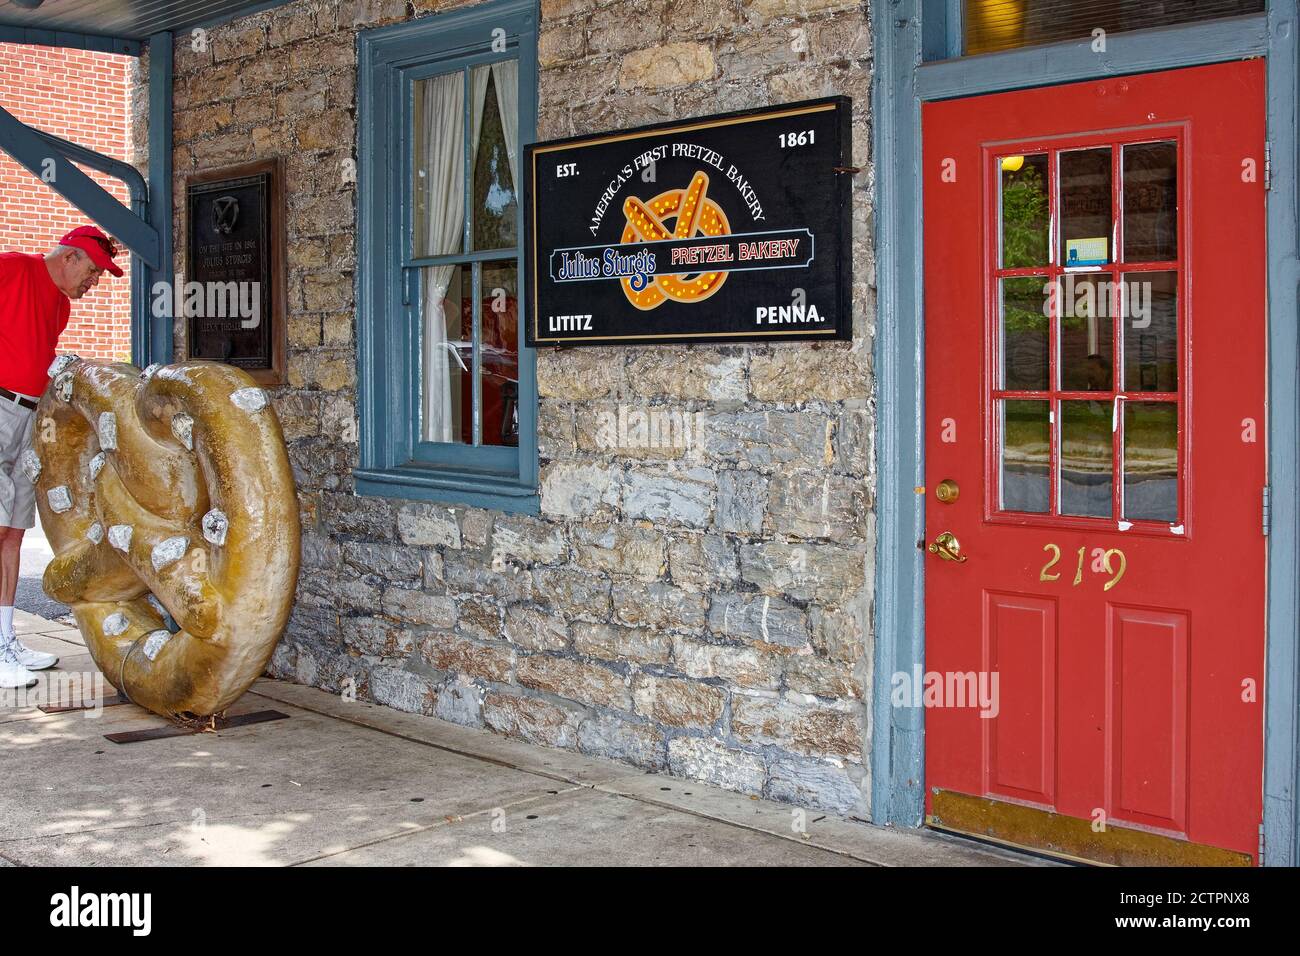 Julius Sturgis Pretzel Bakery, old stone building, red door, blue trim, large pretzel replica, man looking, America's First Pretzel Bakery, 1861, Lanc Stock Photo